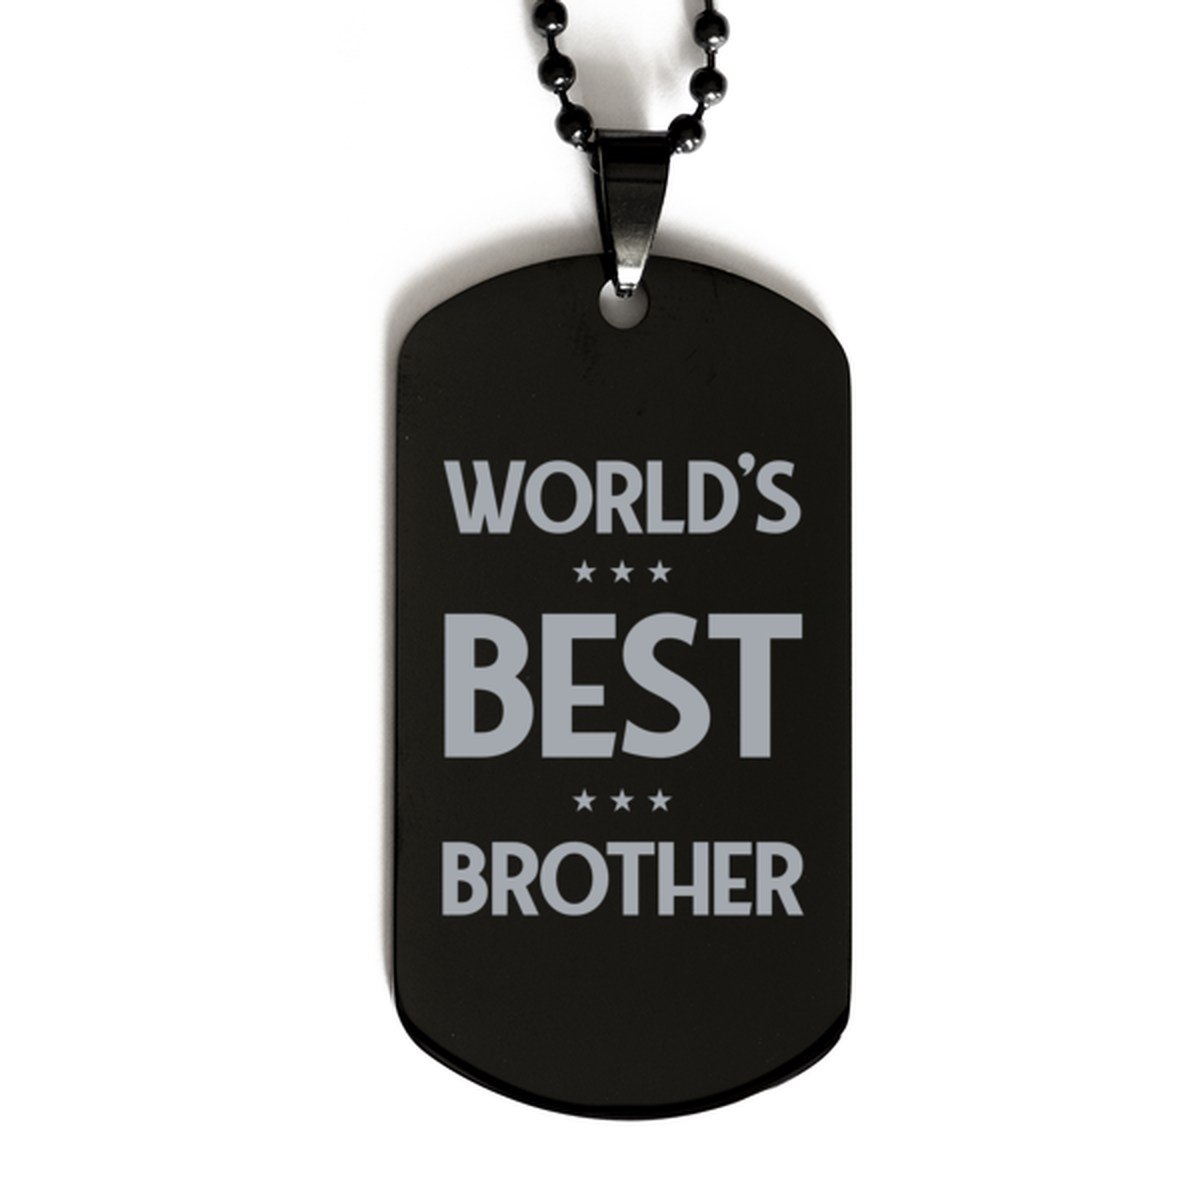 Worlds Best Groomsmen Gifts, Funny Black Engraved Dog Tag For Groomsmen, Birthday Presents For Men